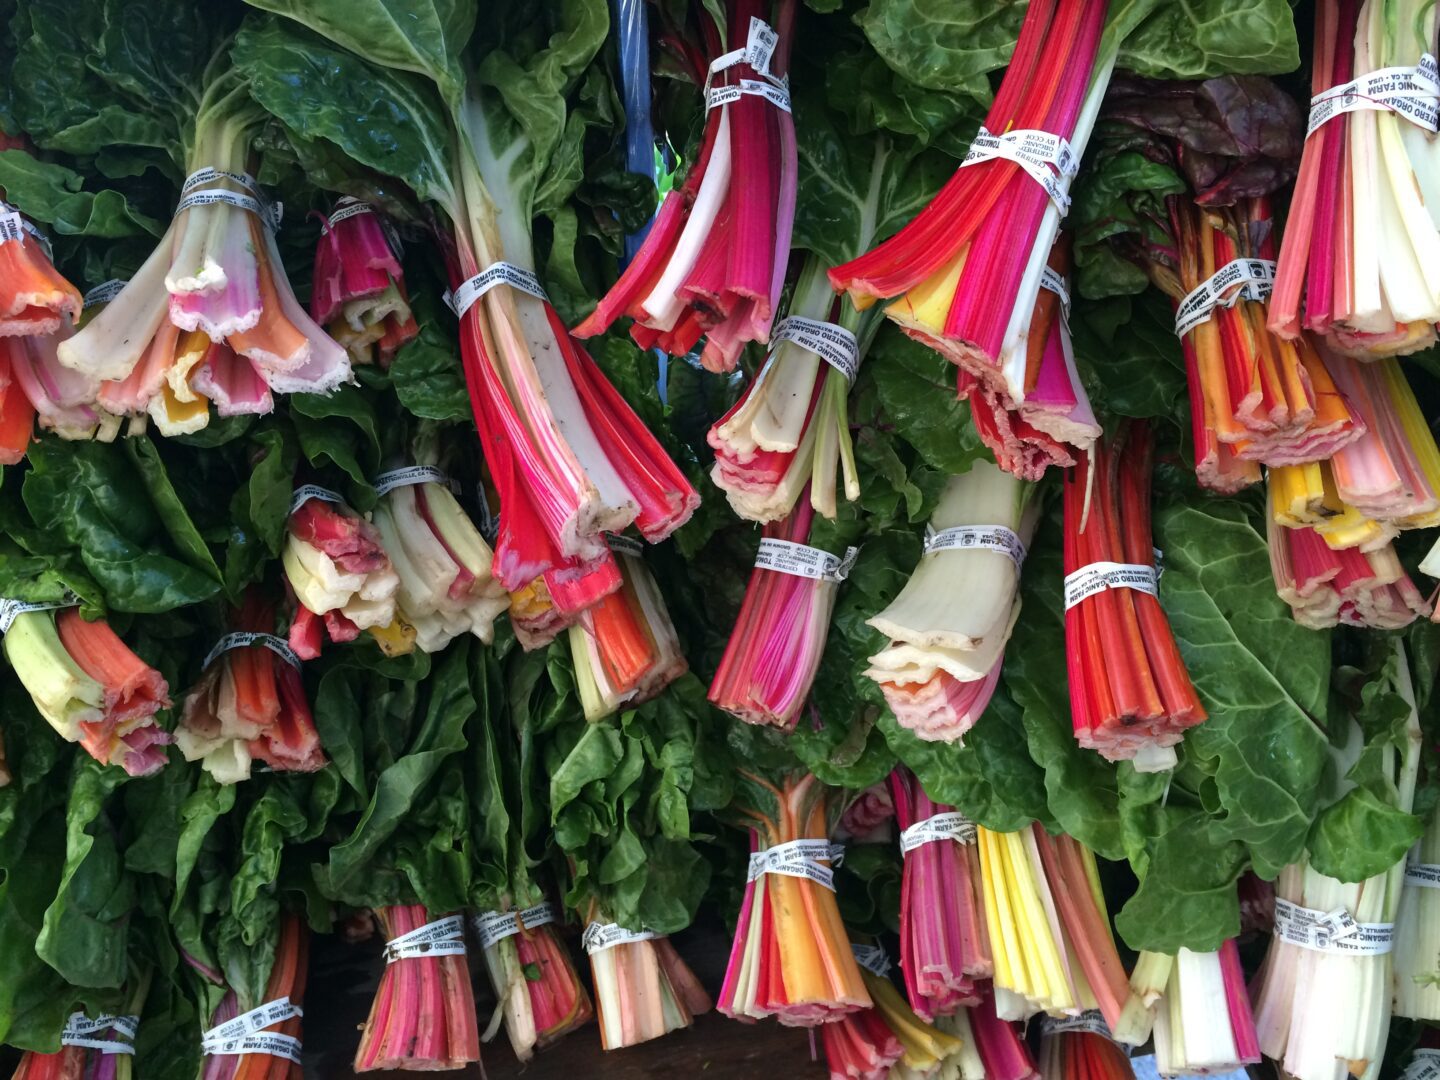 Rhubarb at the farmers market.